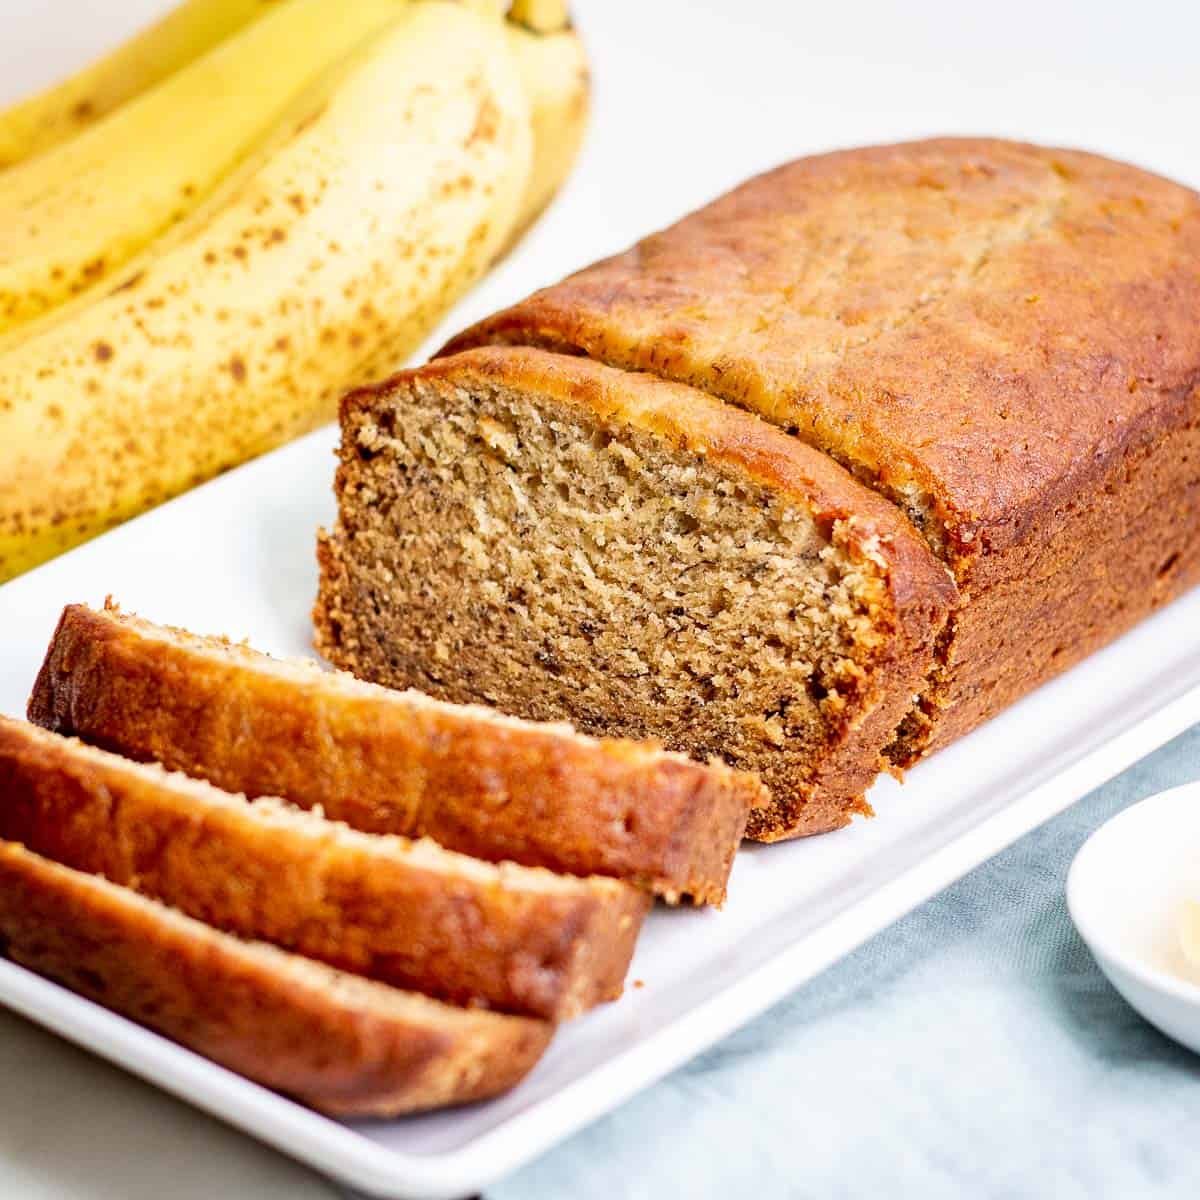 Sliced loaf of freshly baked banana bread with bananas on side.